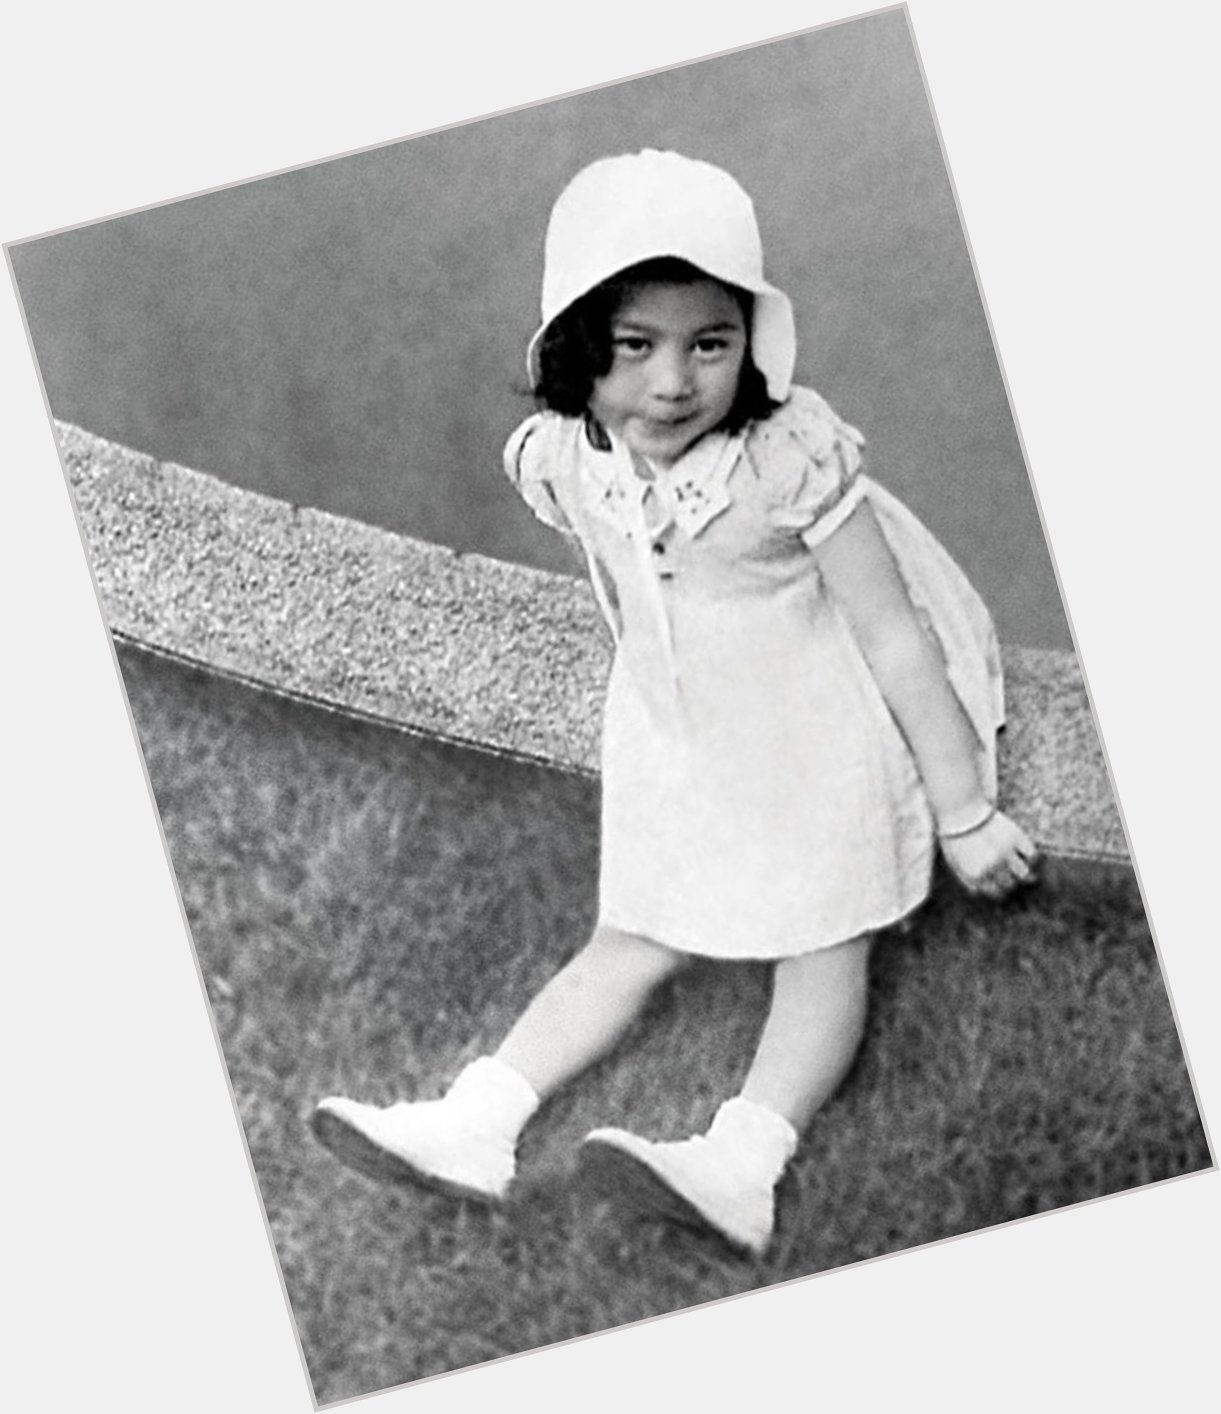 Happy birthday Yoko Ono!     (Ono Y ko)
Born February 18, 1933 